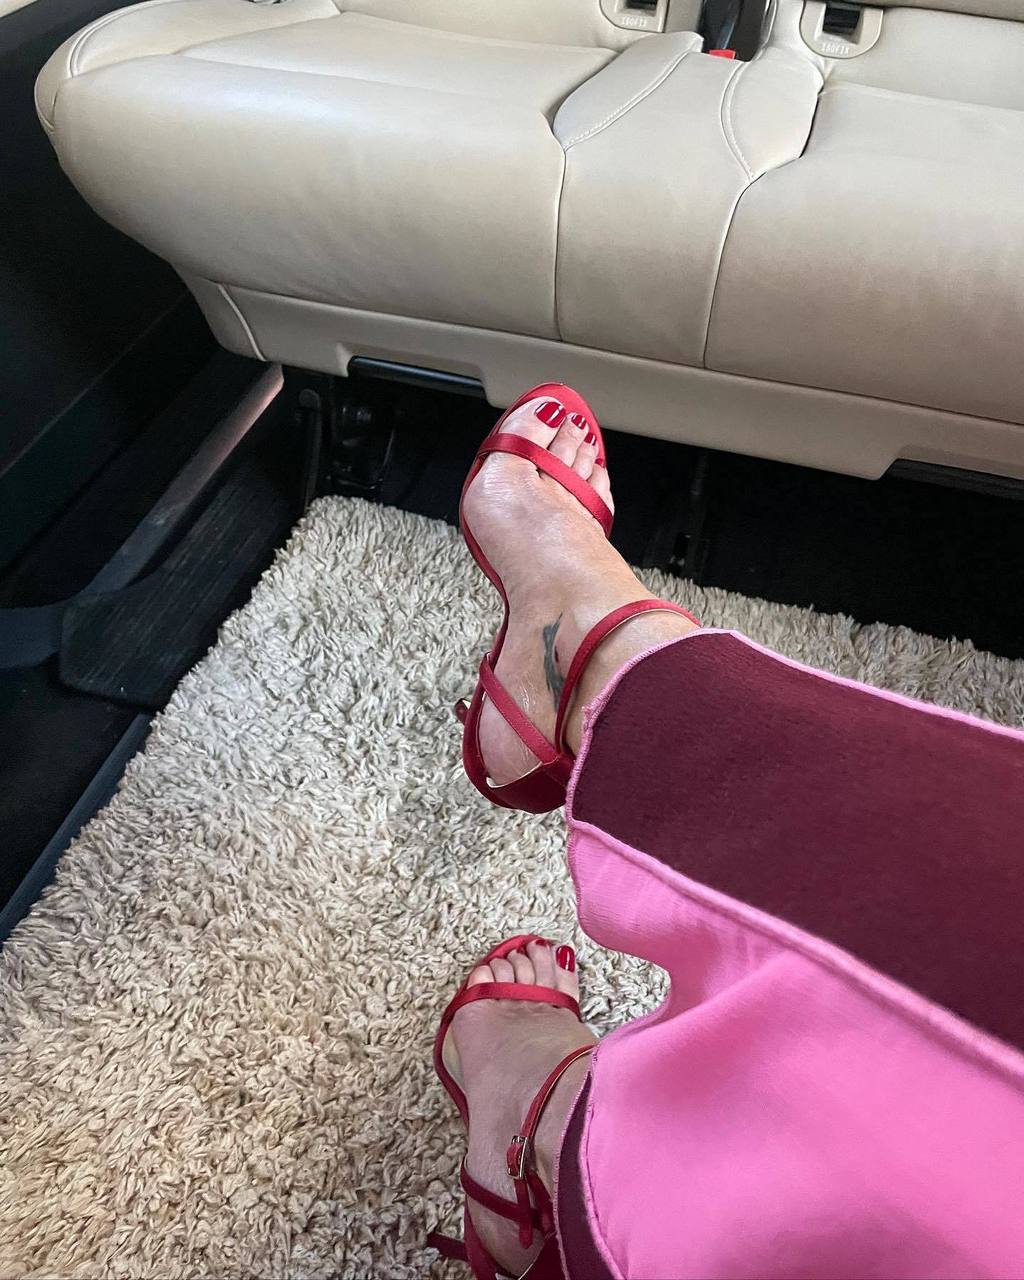 Gillian Anderson Feet